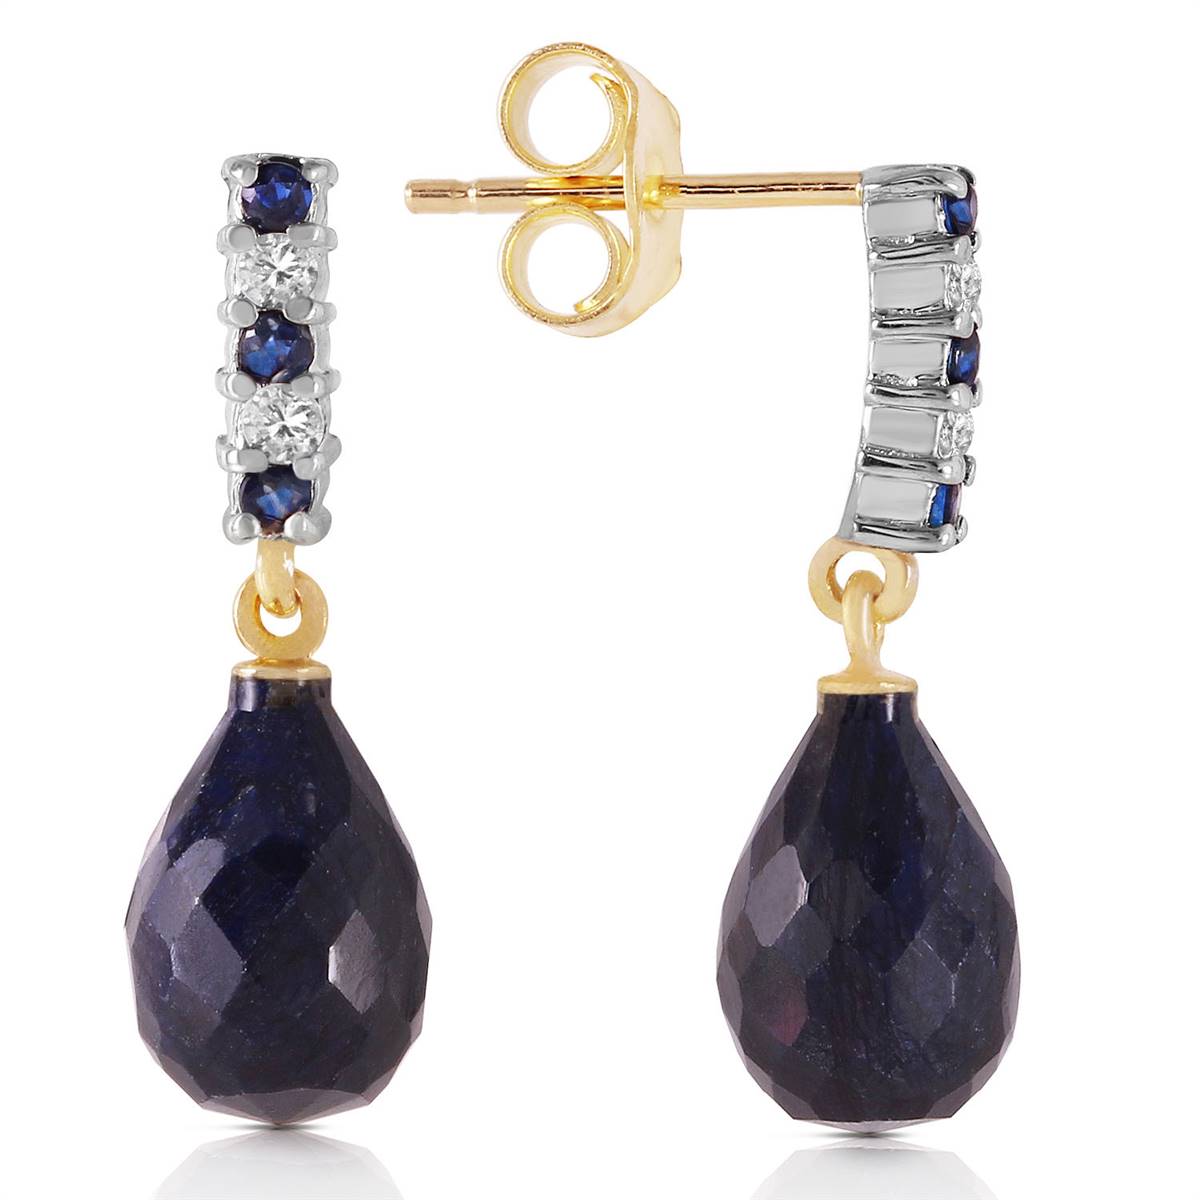 6.9 Carat 14K Solid Yellow Gold Diamond Sapphire Earrings Dangling Briolet